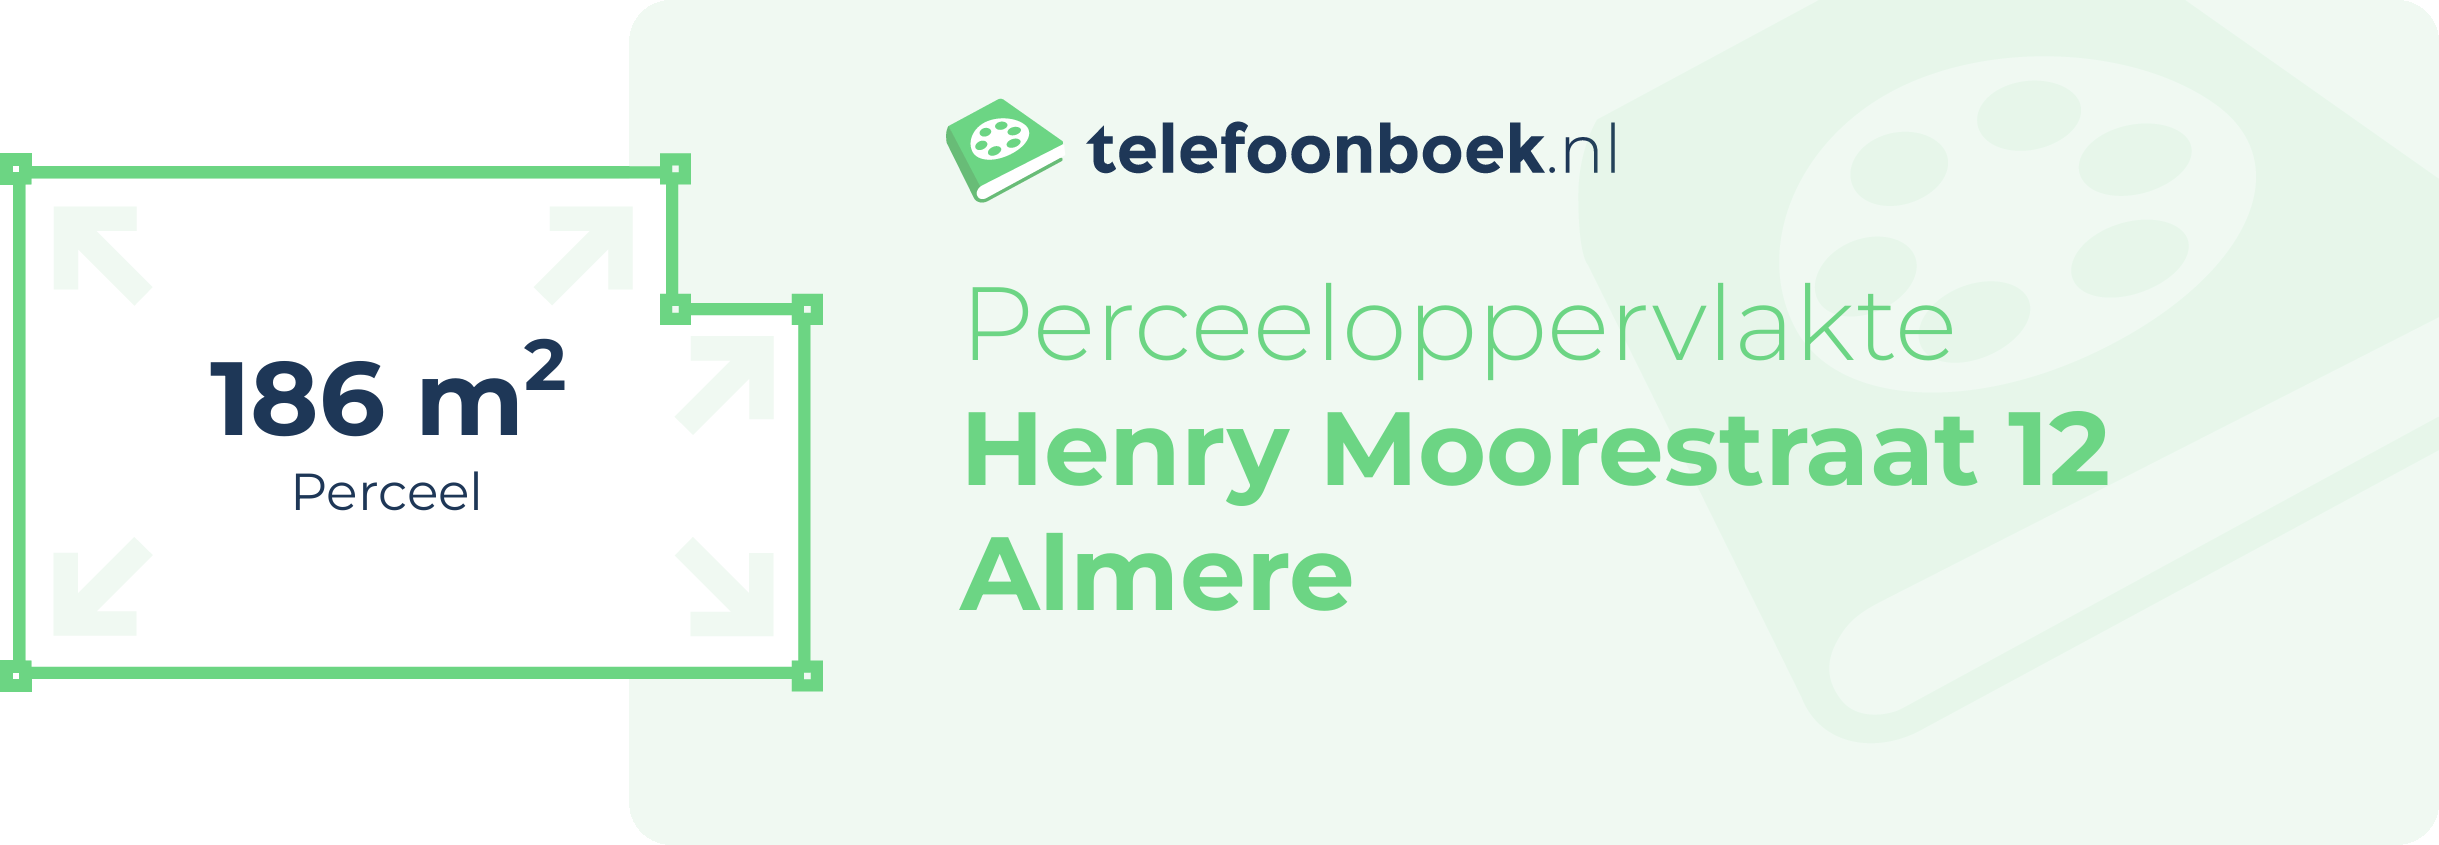 Perceeloppervlakte Henry Moorestraat 12 Almere